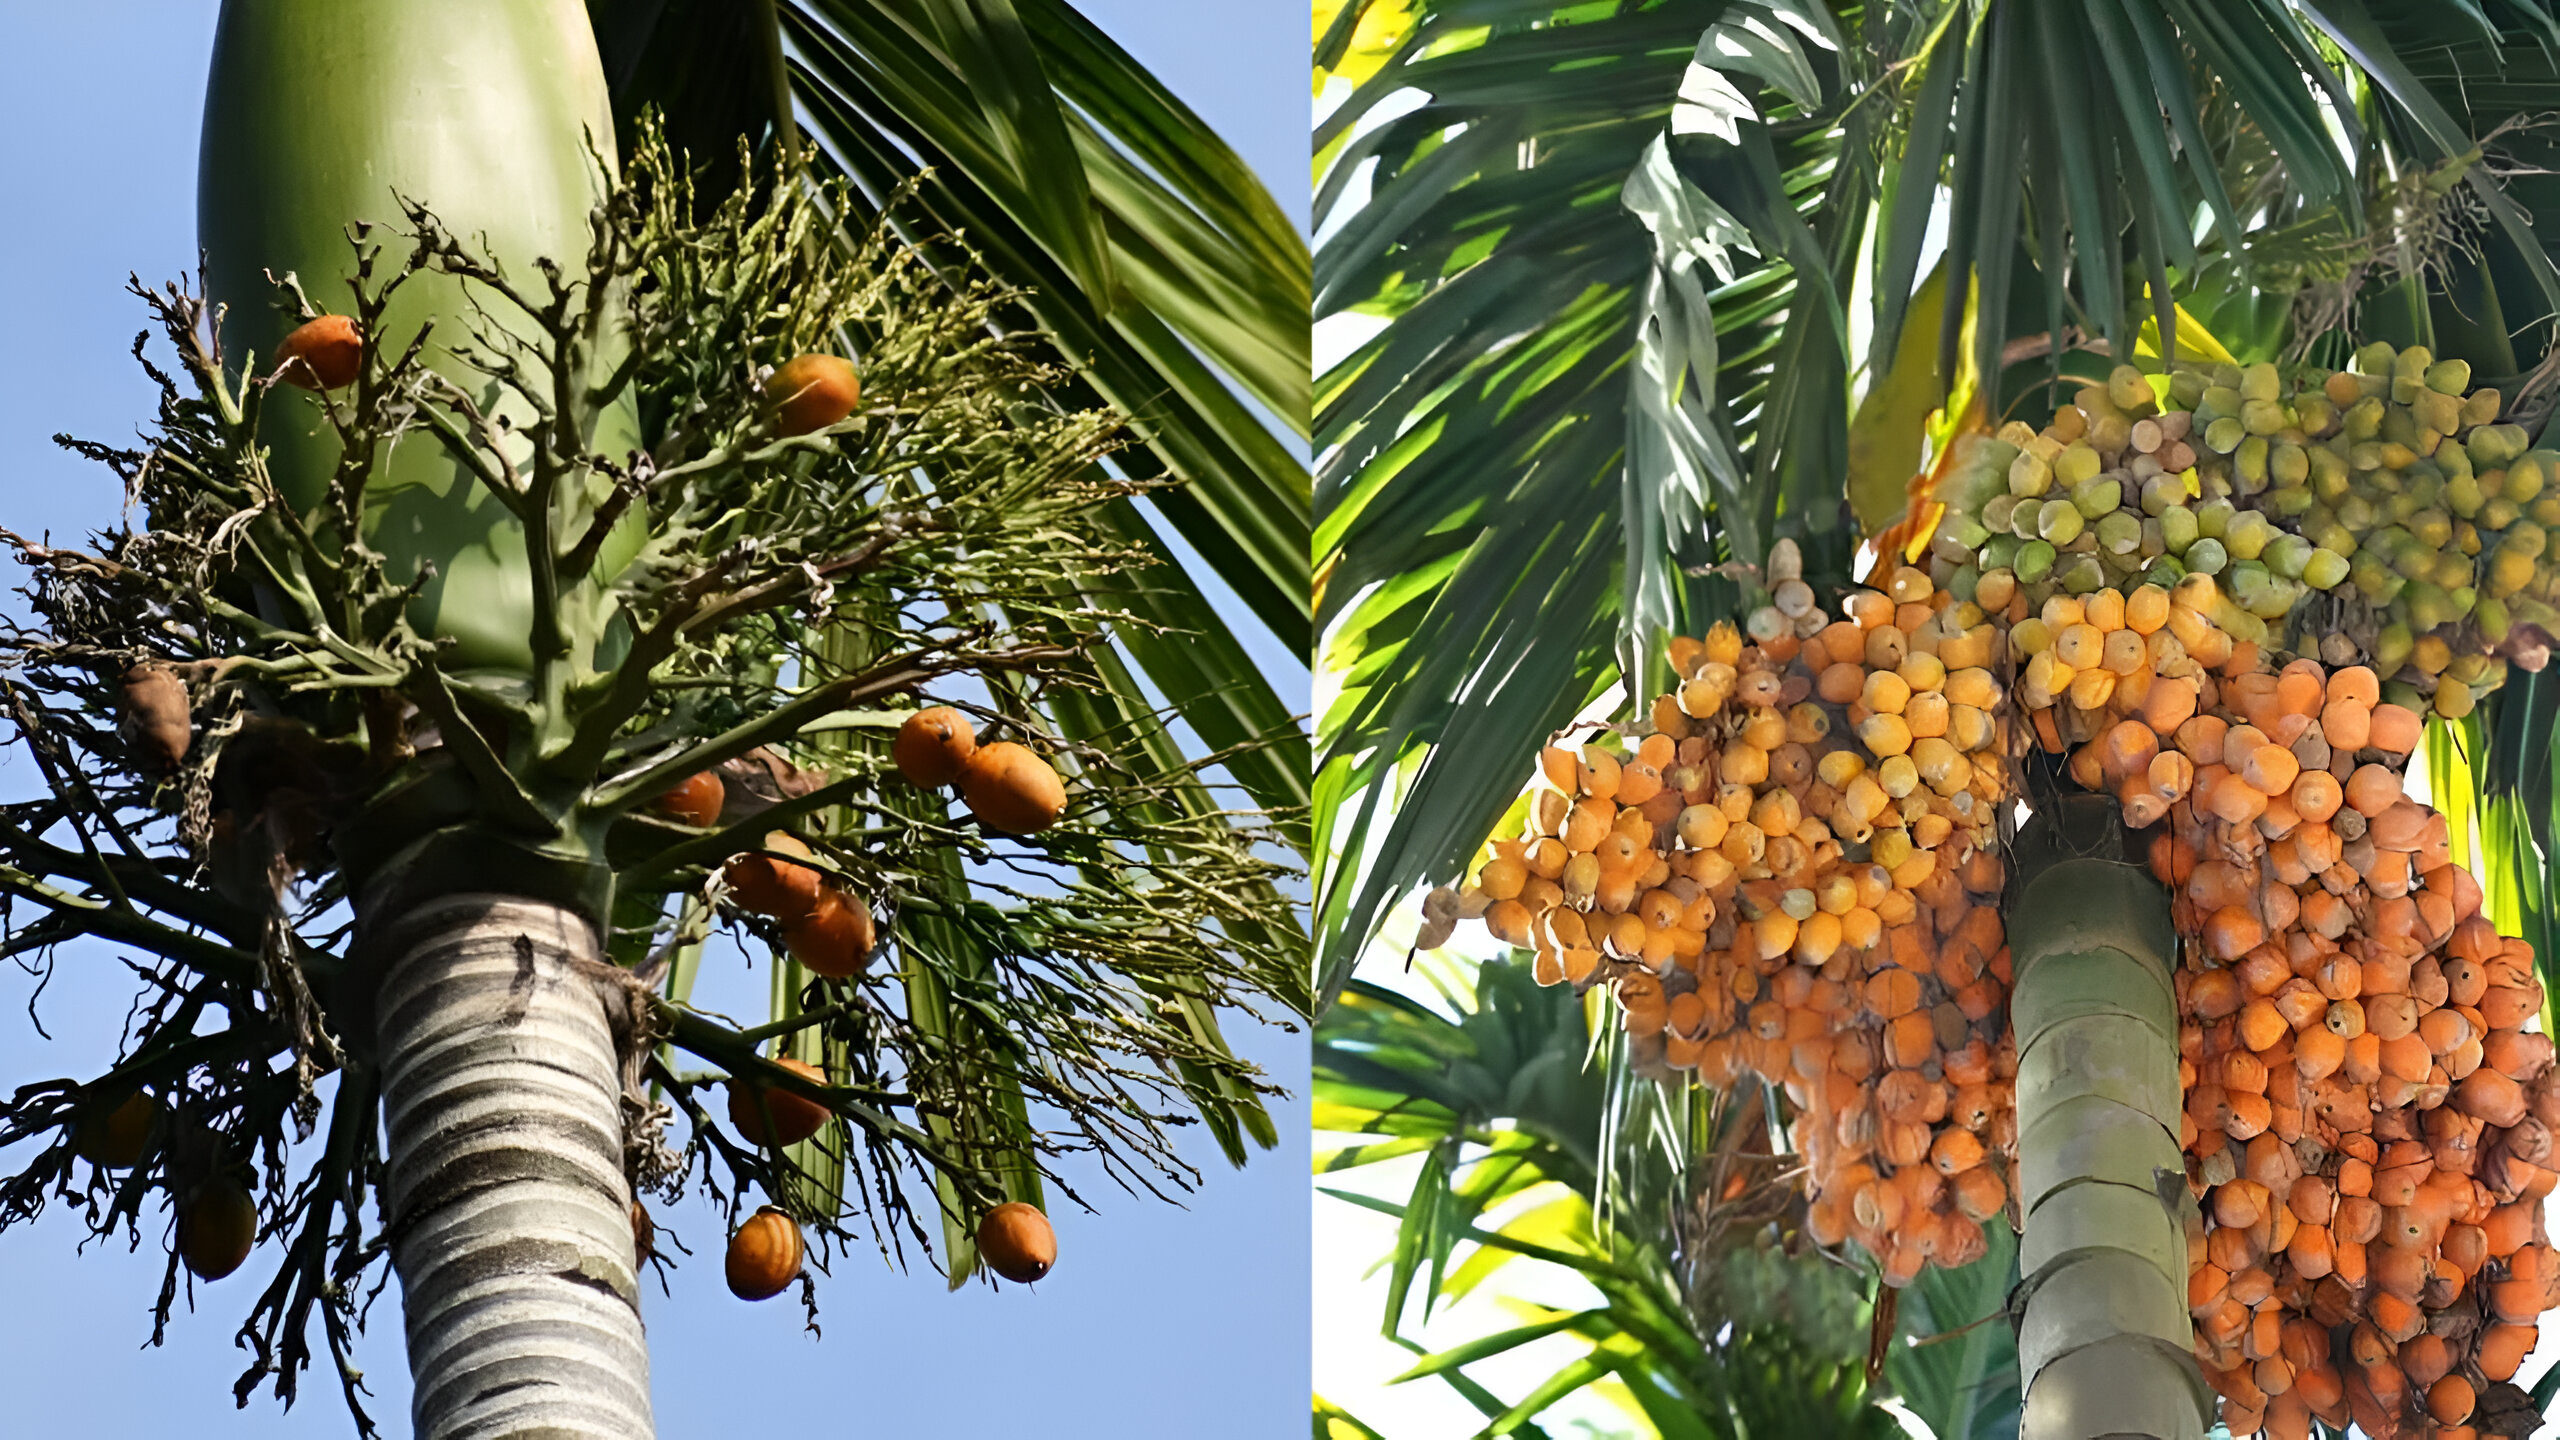 Areca nut production in India is dominant in the coastal region within 400 kilometres